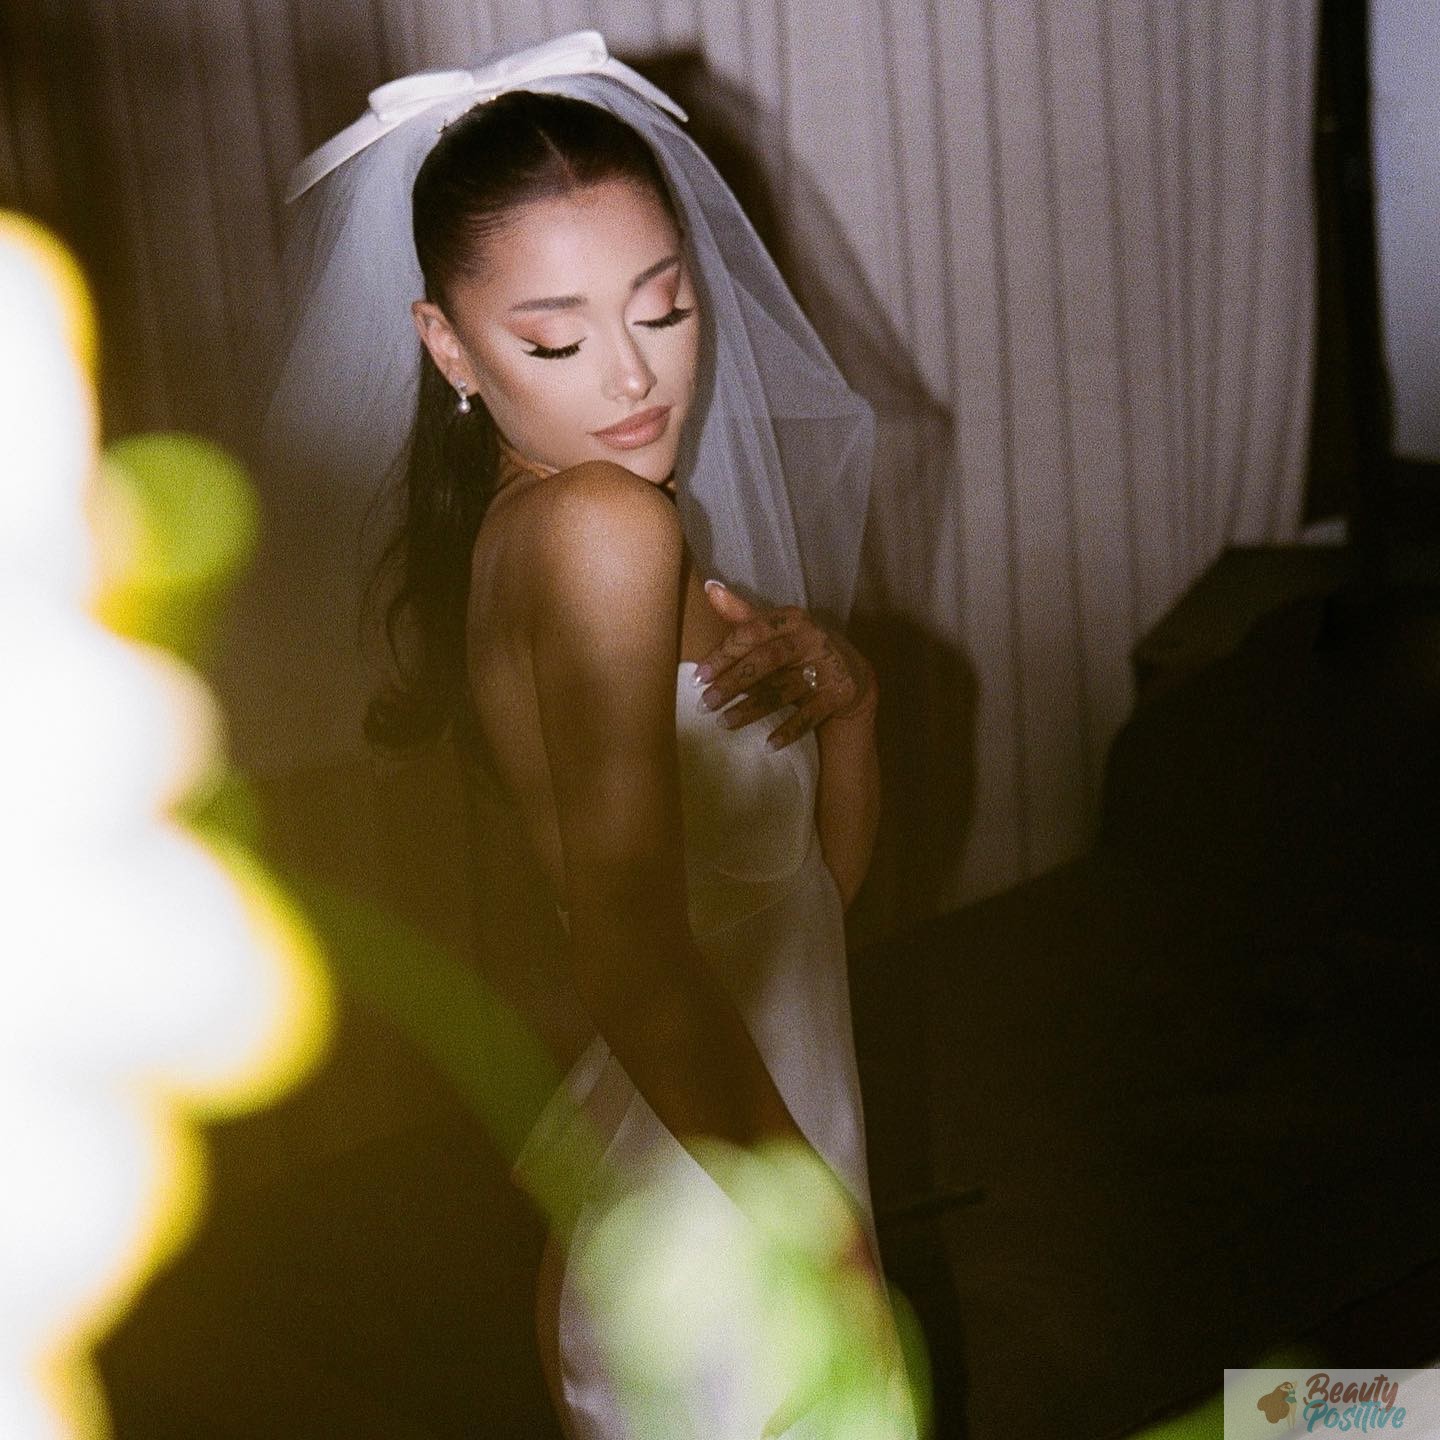 Ariana Grande' wedding dress